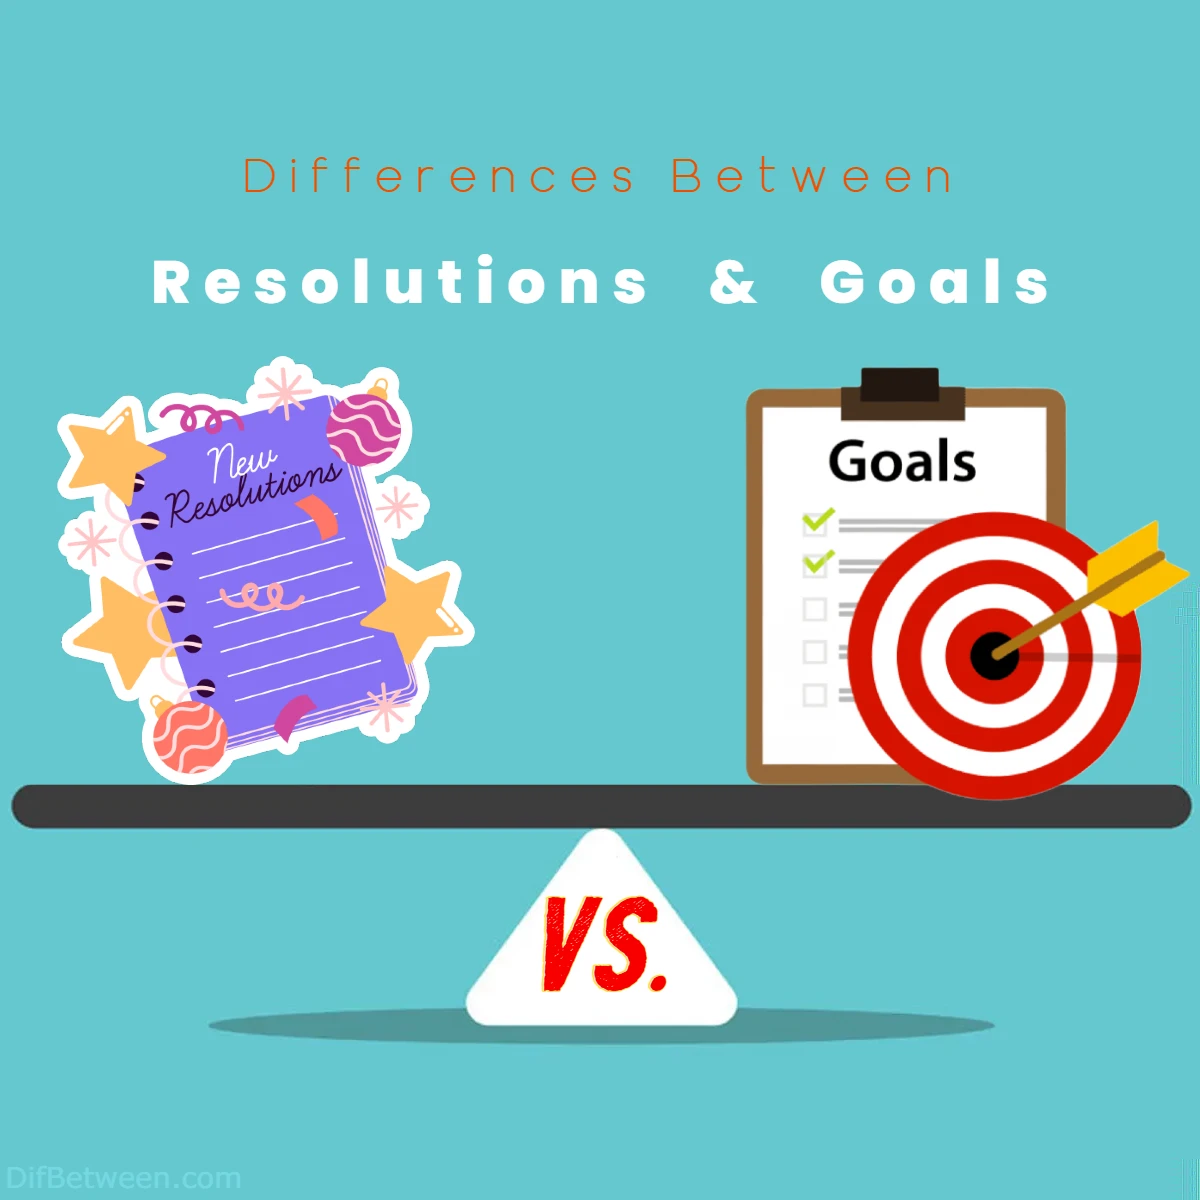 Differences Between Resolutions vs Goals